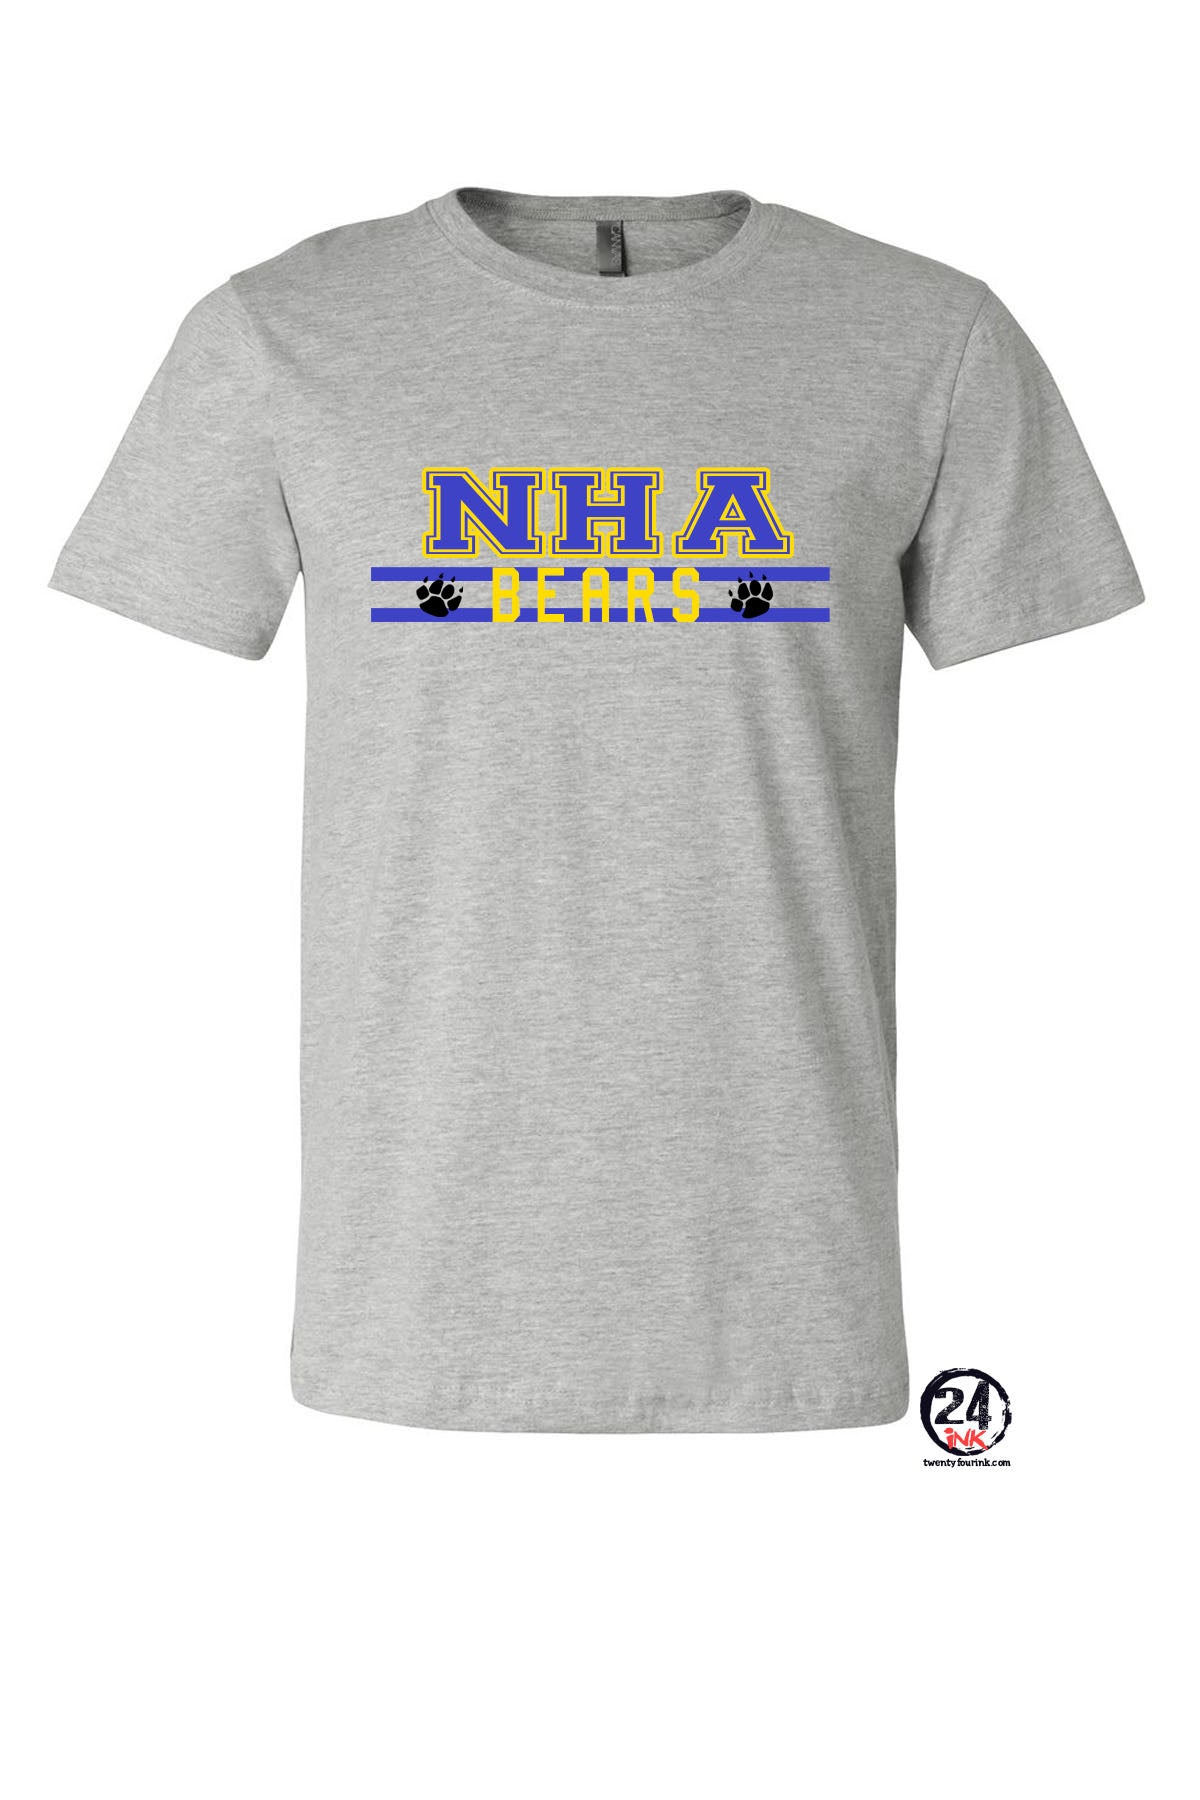 NHA Paw T-Shirt